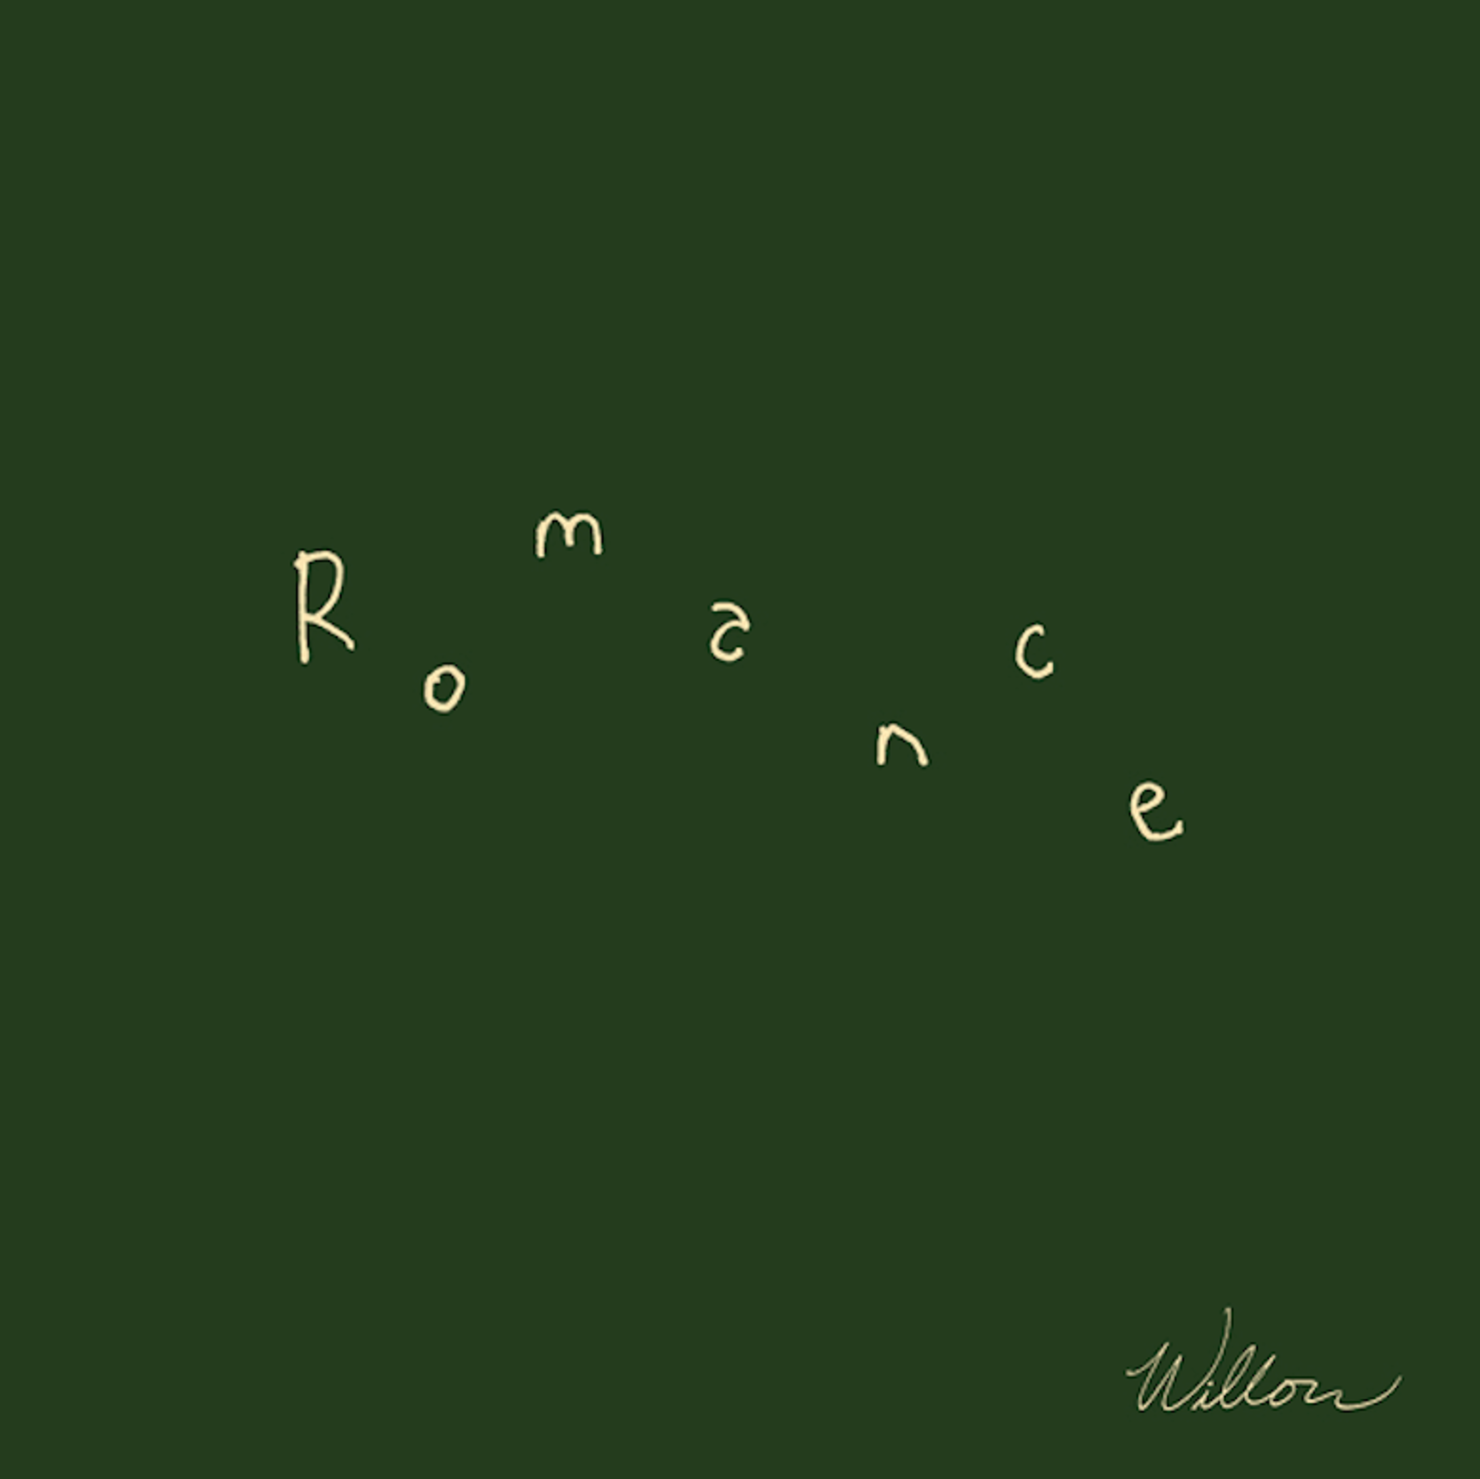 Willow Smith - "Romance"